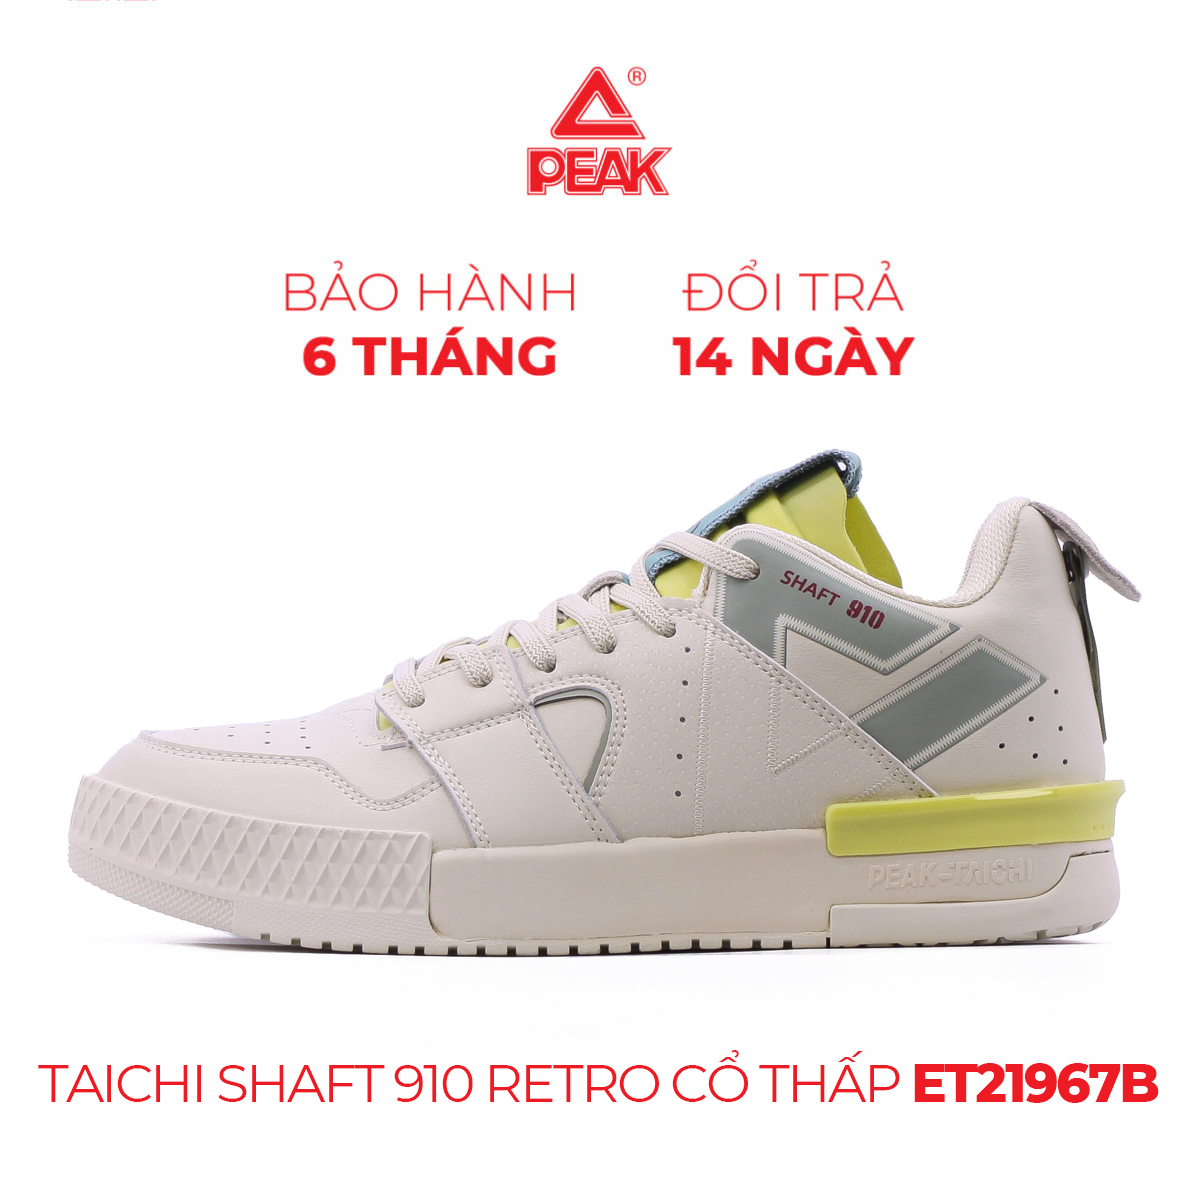 Giày thể thao Nam PEAK Taichi Shaft 910 Retro cổ thấp ET21967B